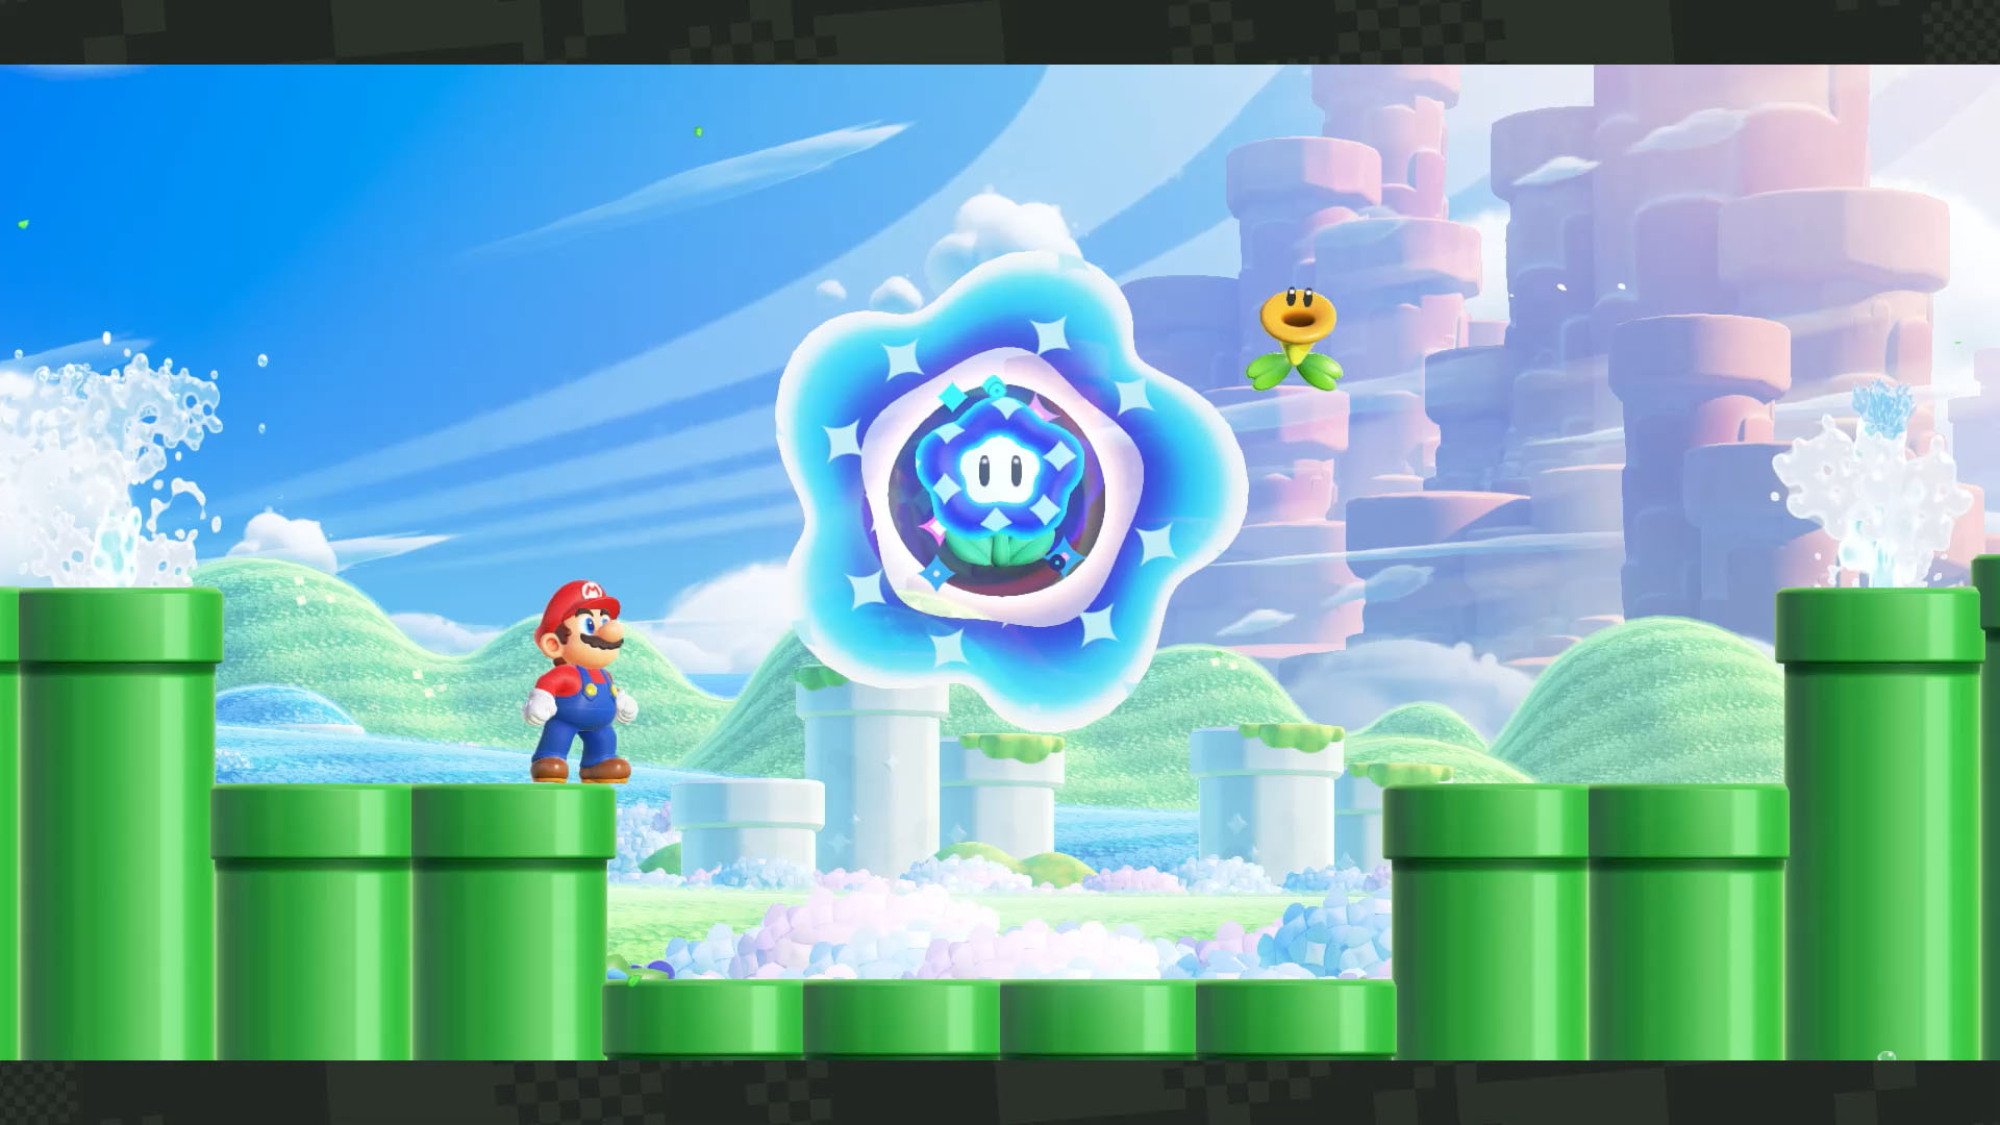 Mario looking at a Wonder Flower in Super Mario Bros. Wonder